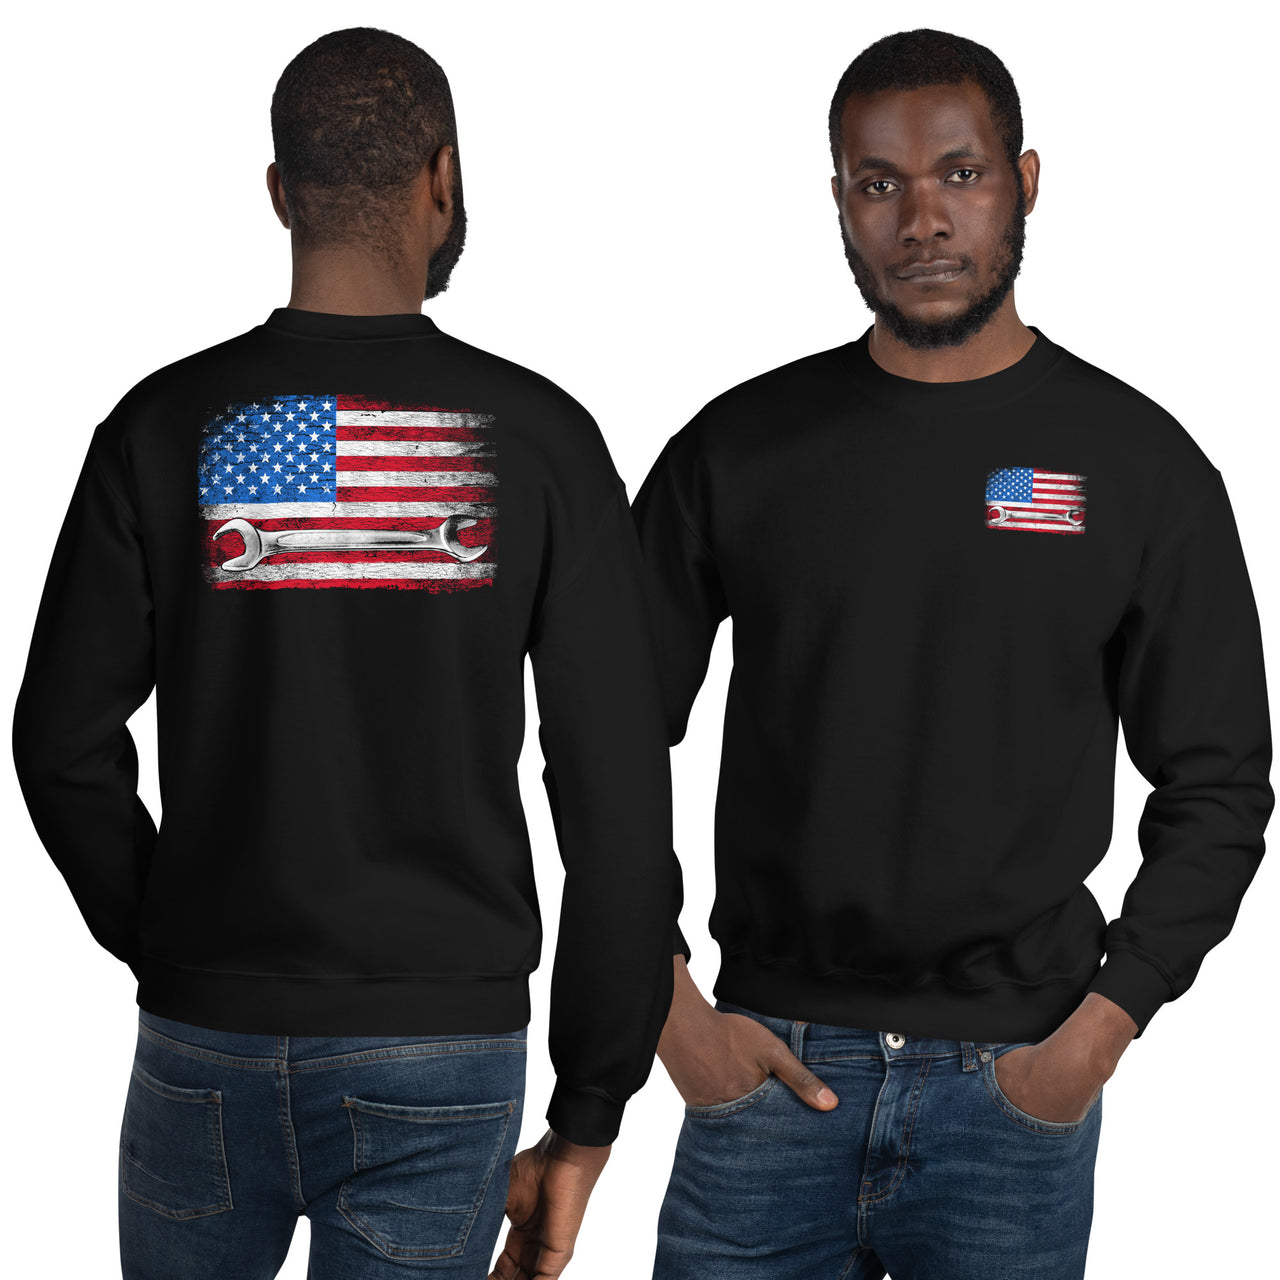 Mechanic Crew Neck Sweatshirt modeled in black